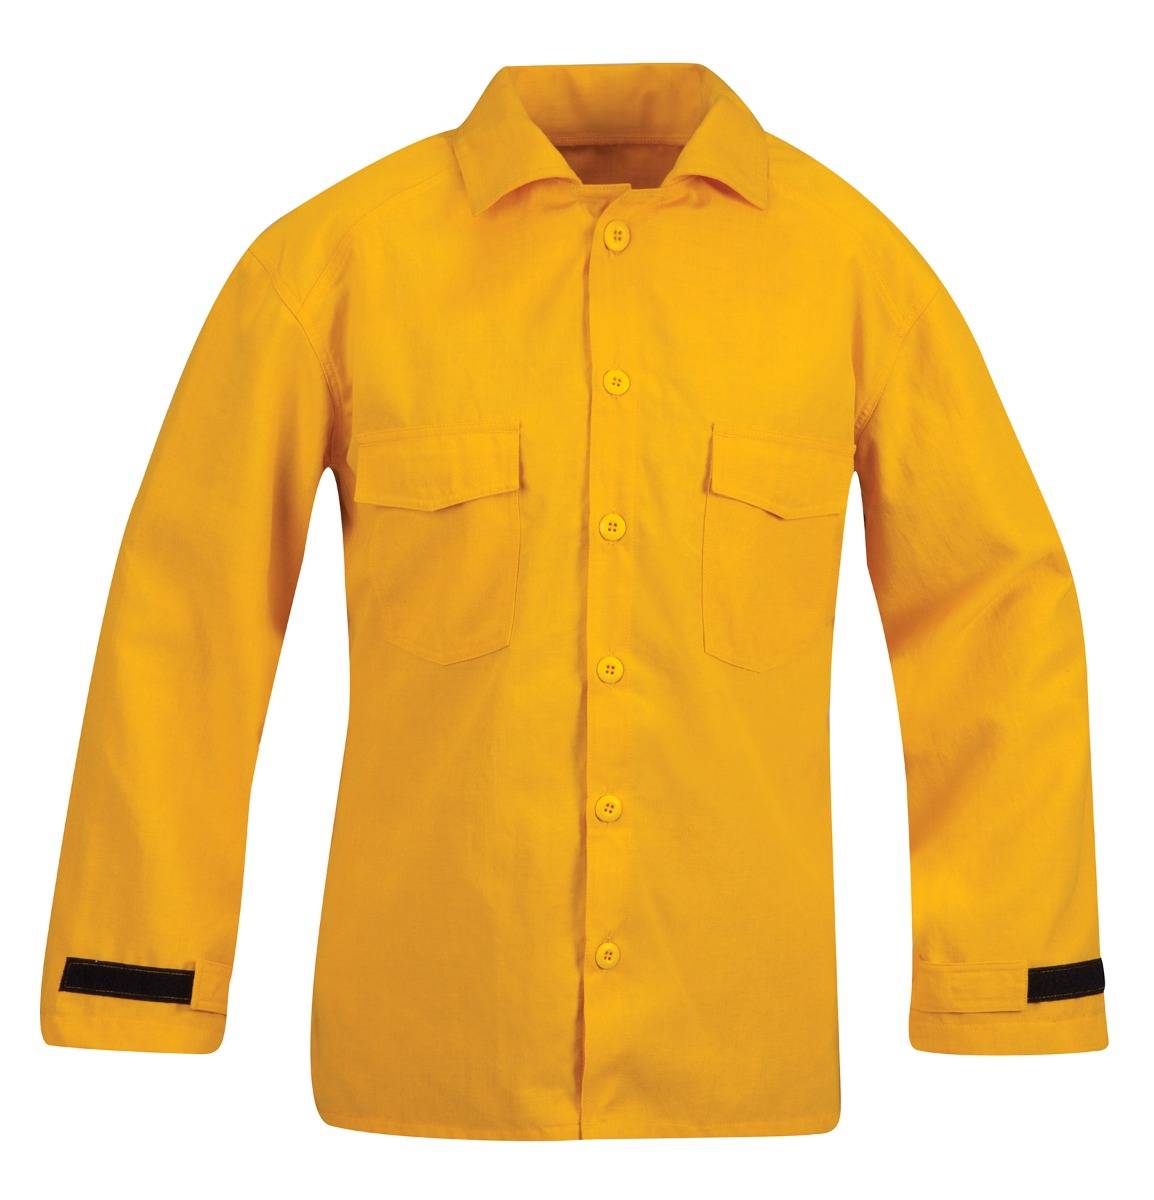 Propper Fire Resistant Wildland Shirt